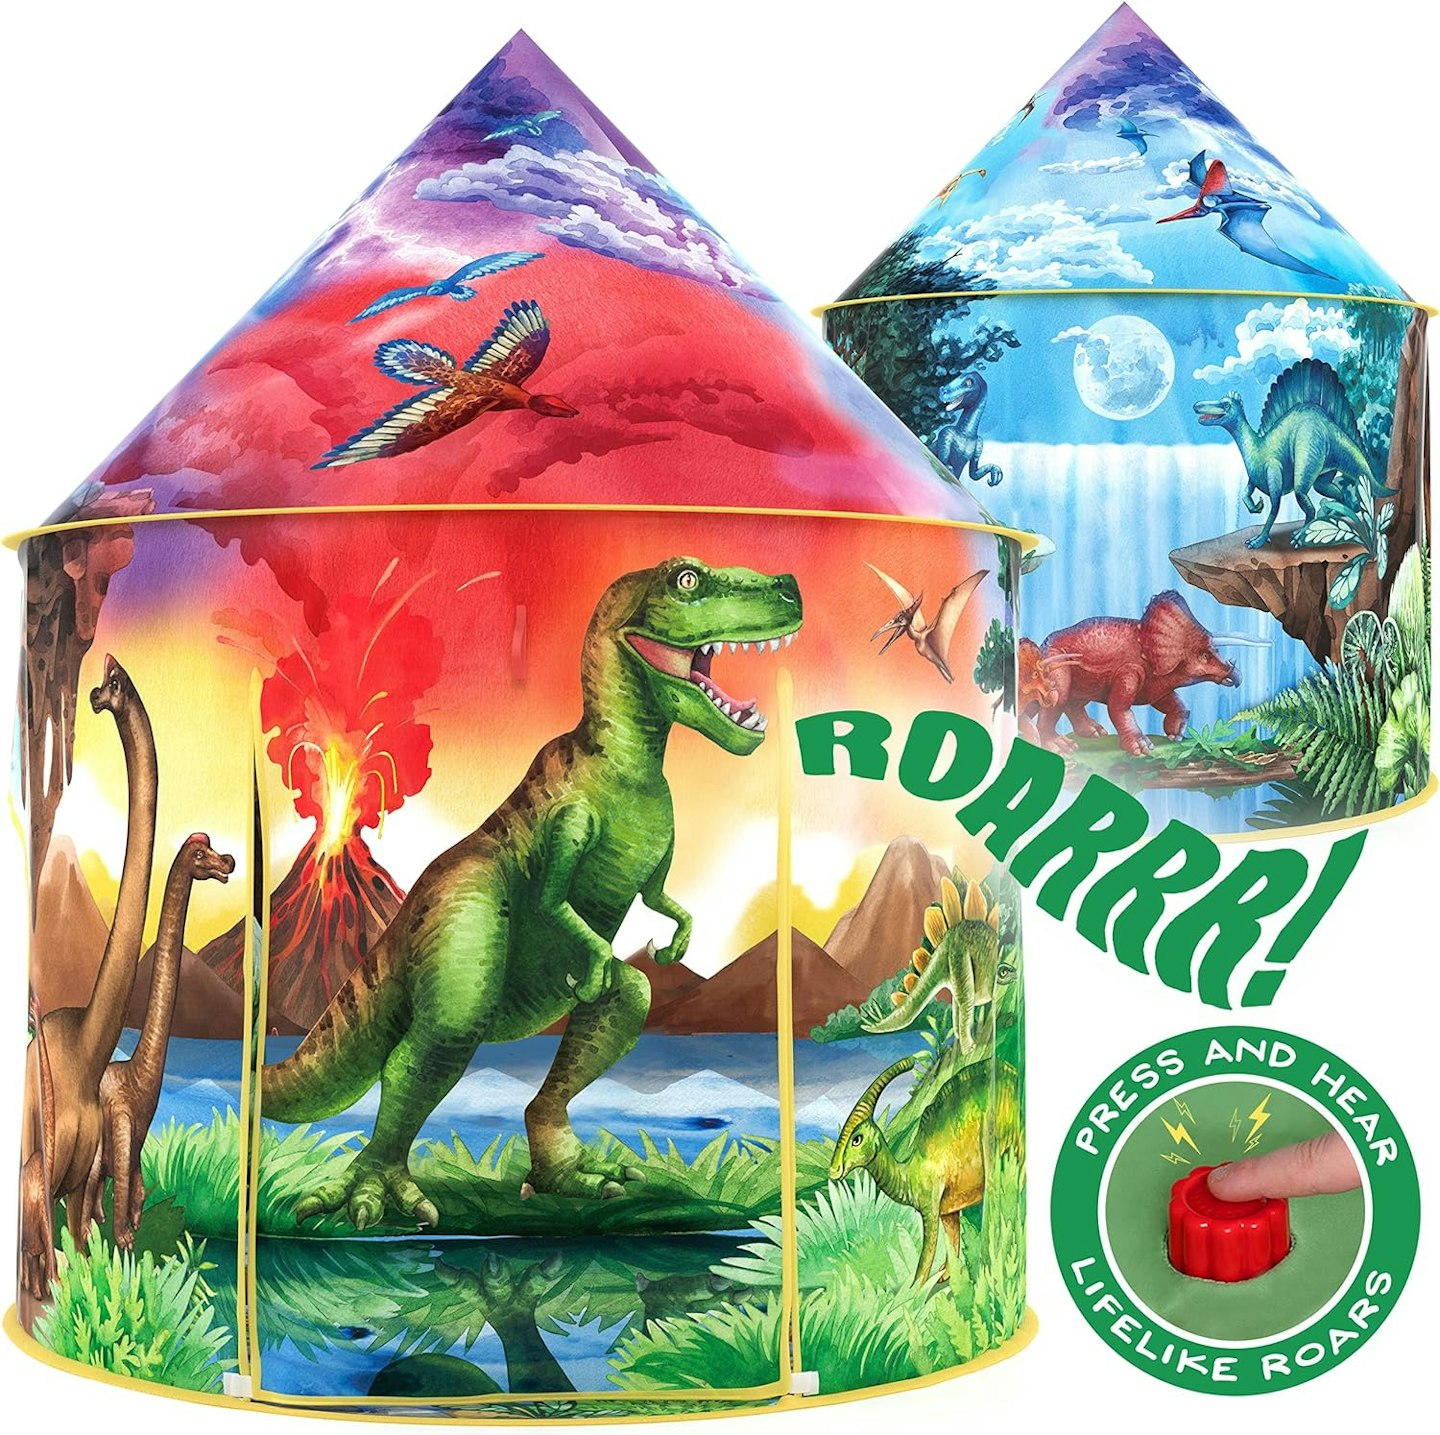 Dinosaur play tent argos 